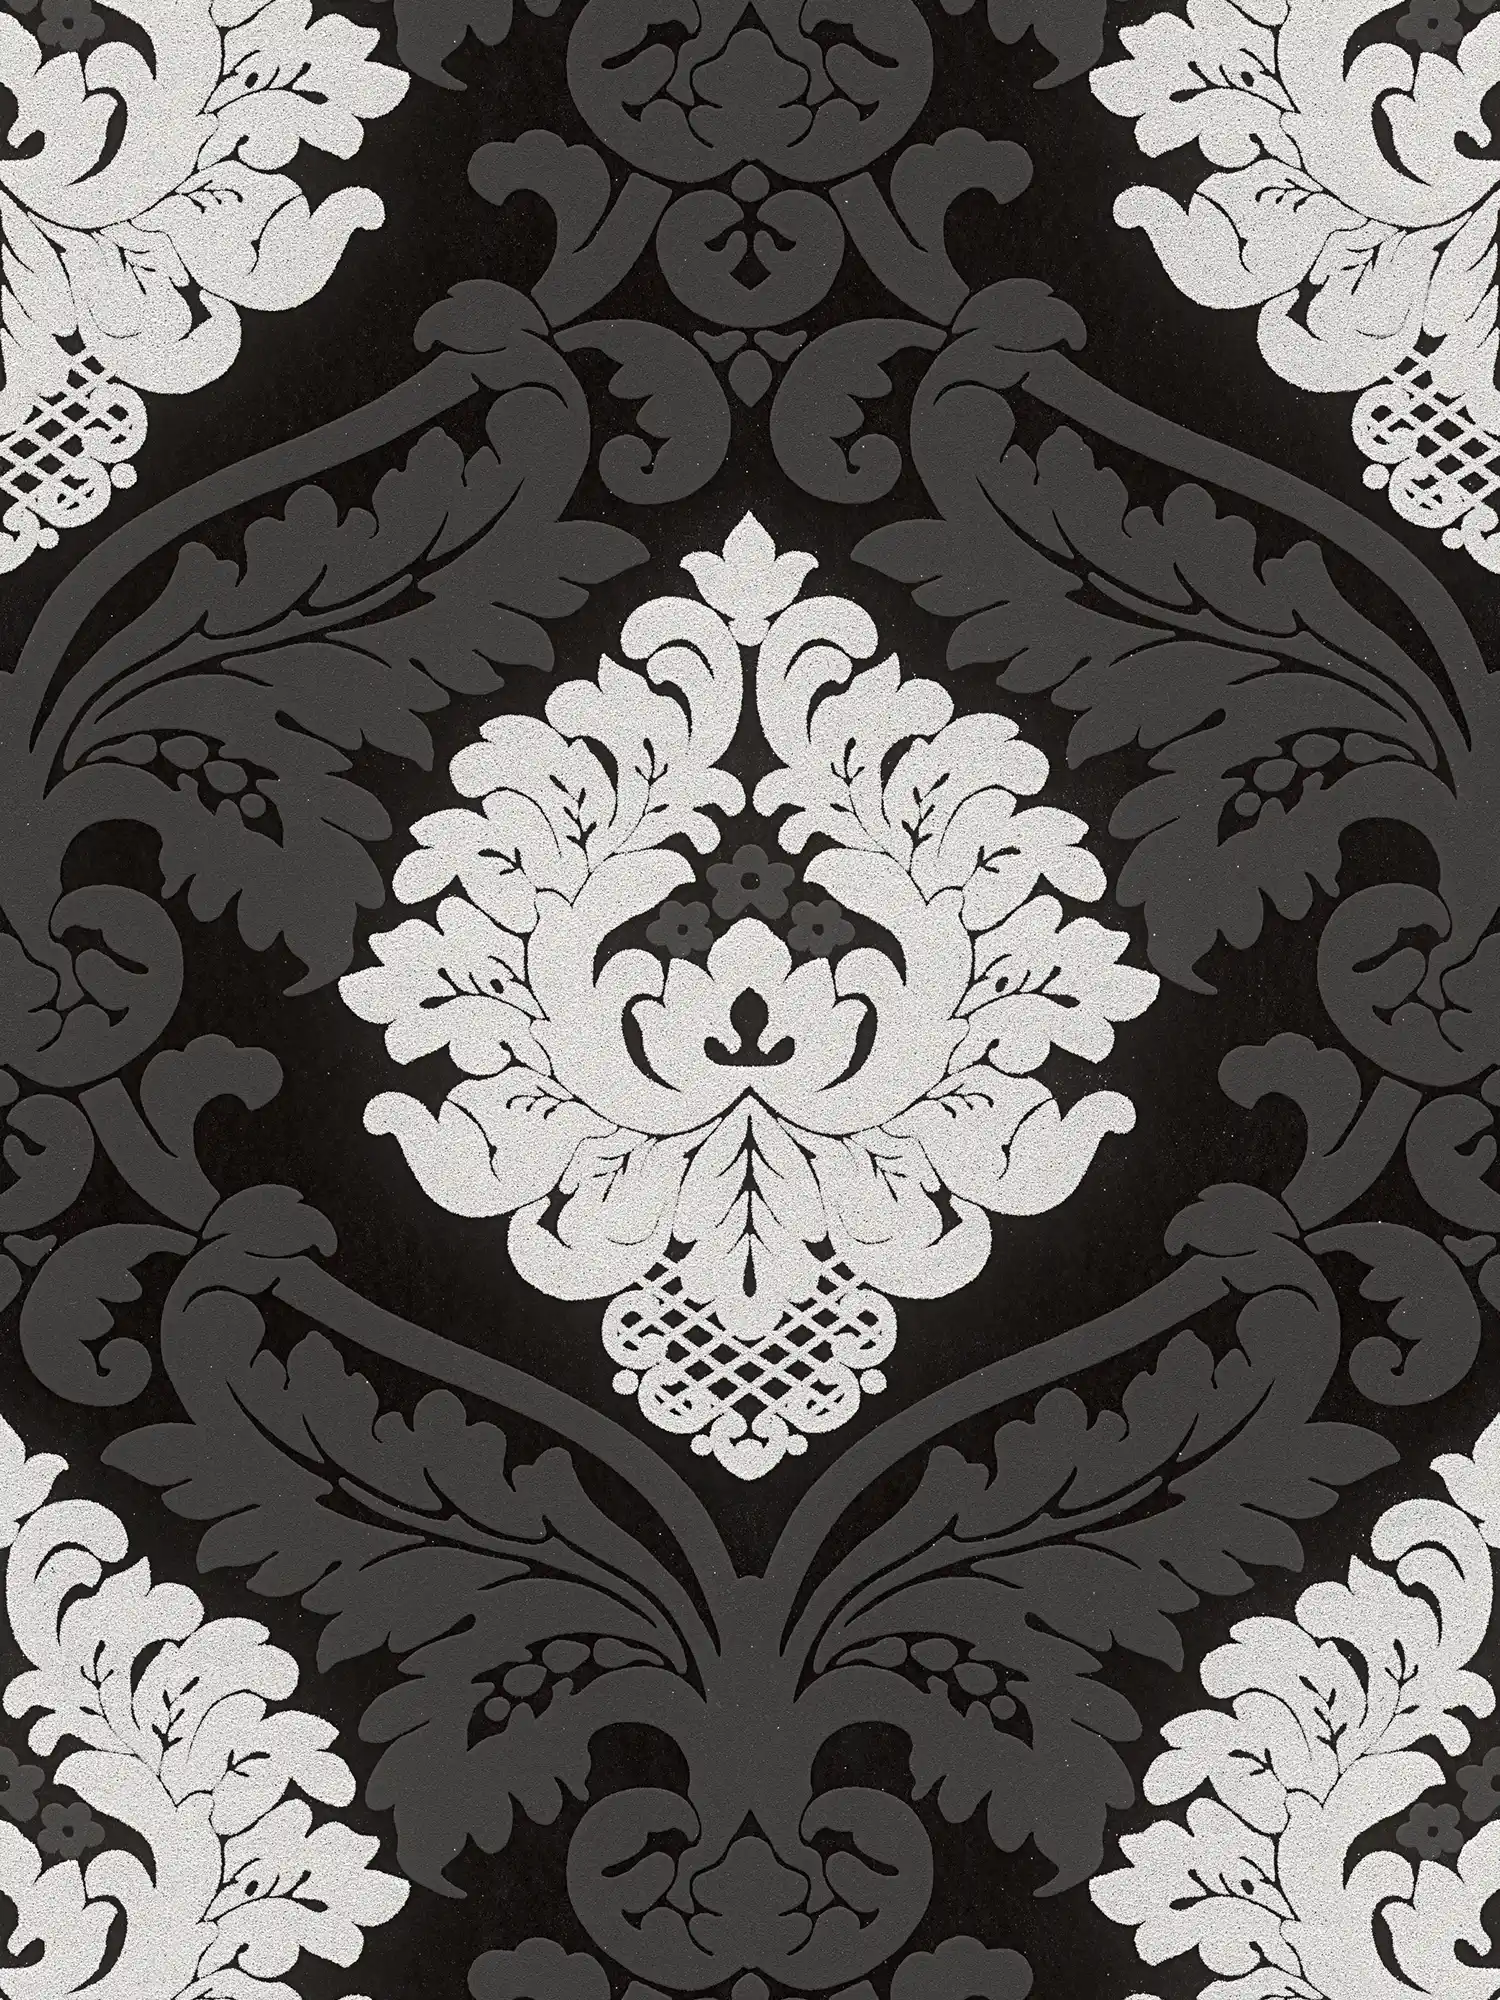 Ornamenteel behang glitter effect & 3D effect - zwart, zilver, wit
